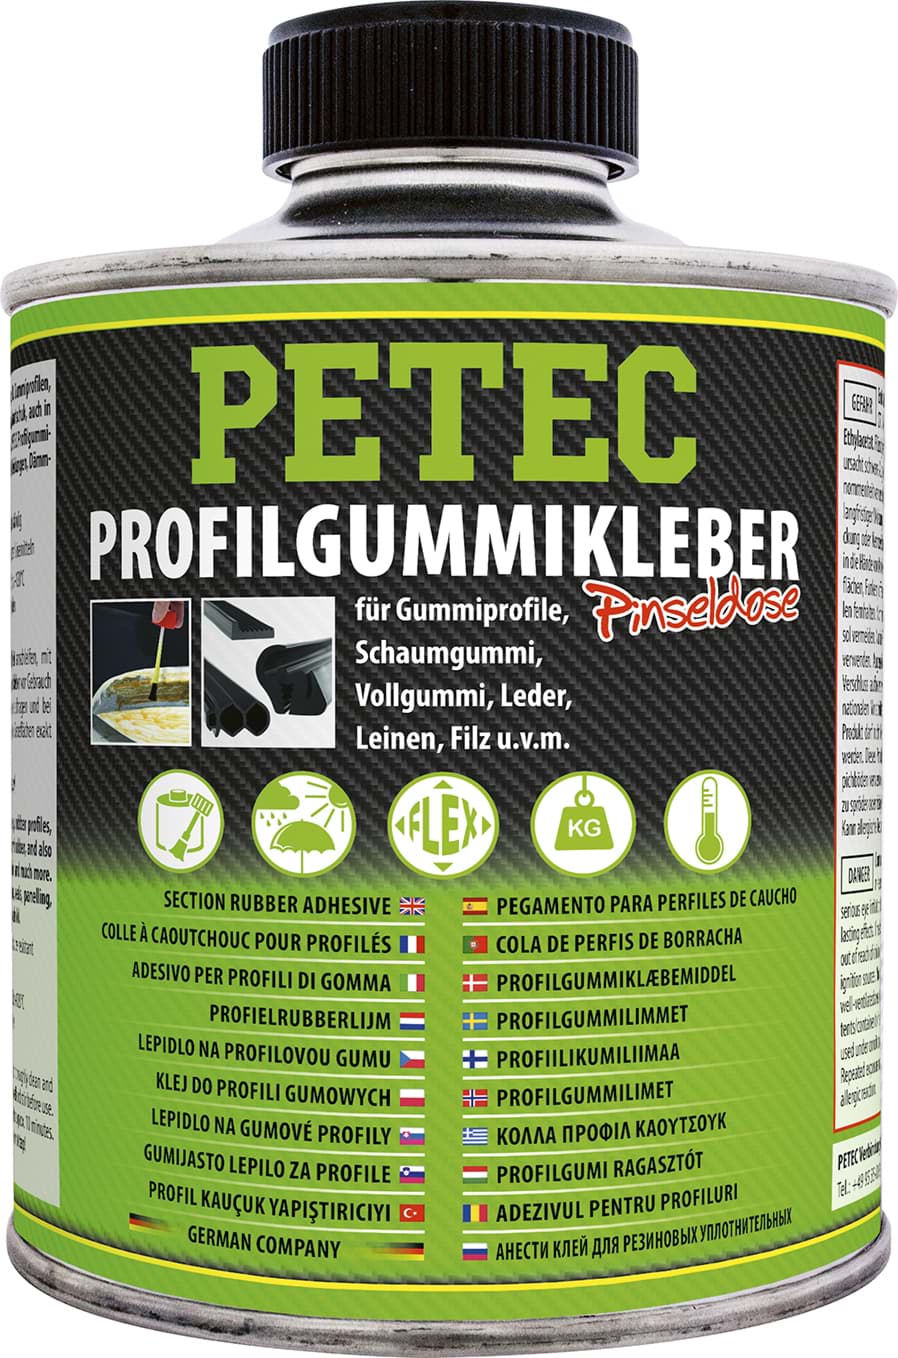 Petec Profilgummikleber Pinseldose 93835 Kontakt Kleber 350ml